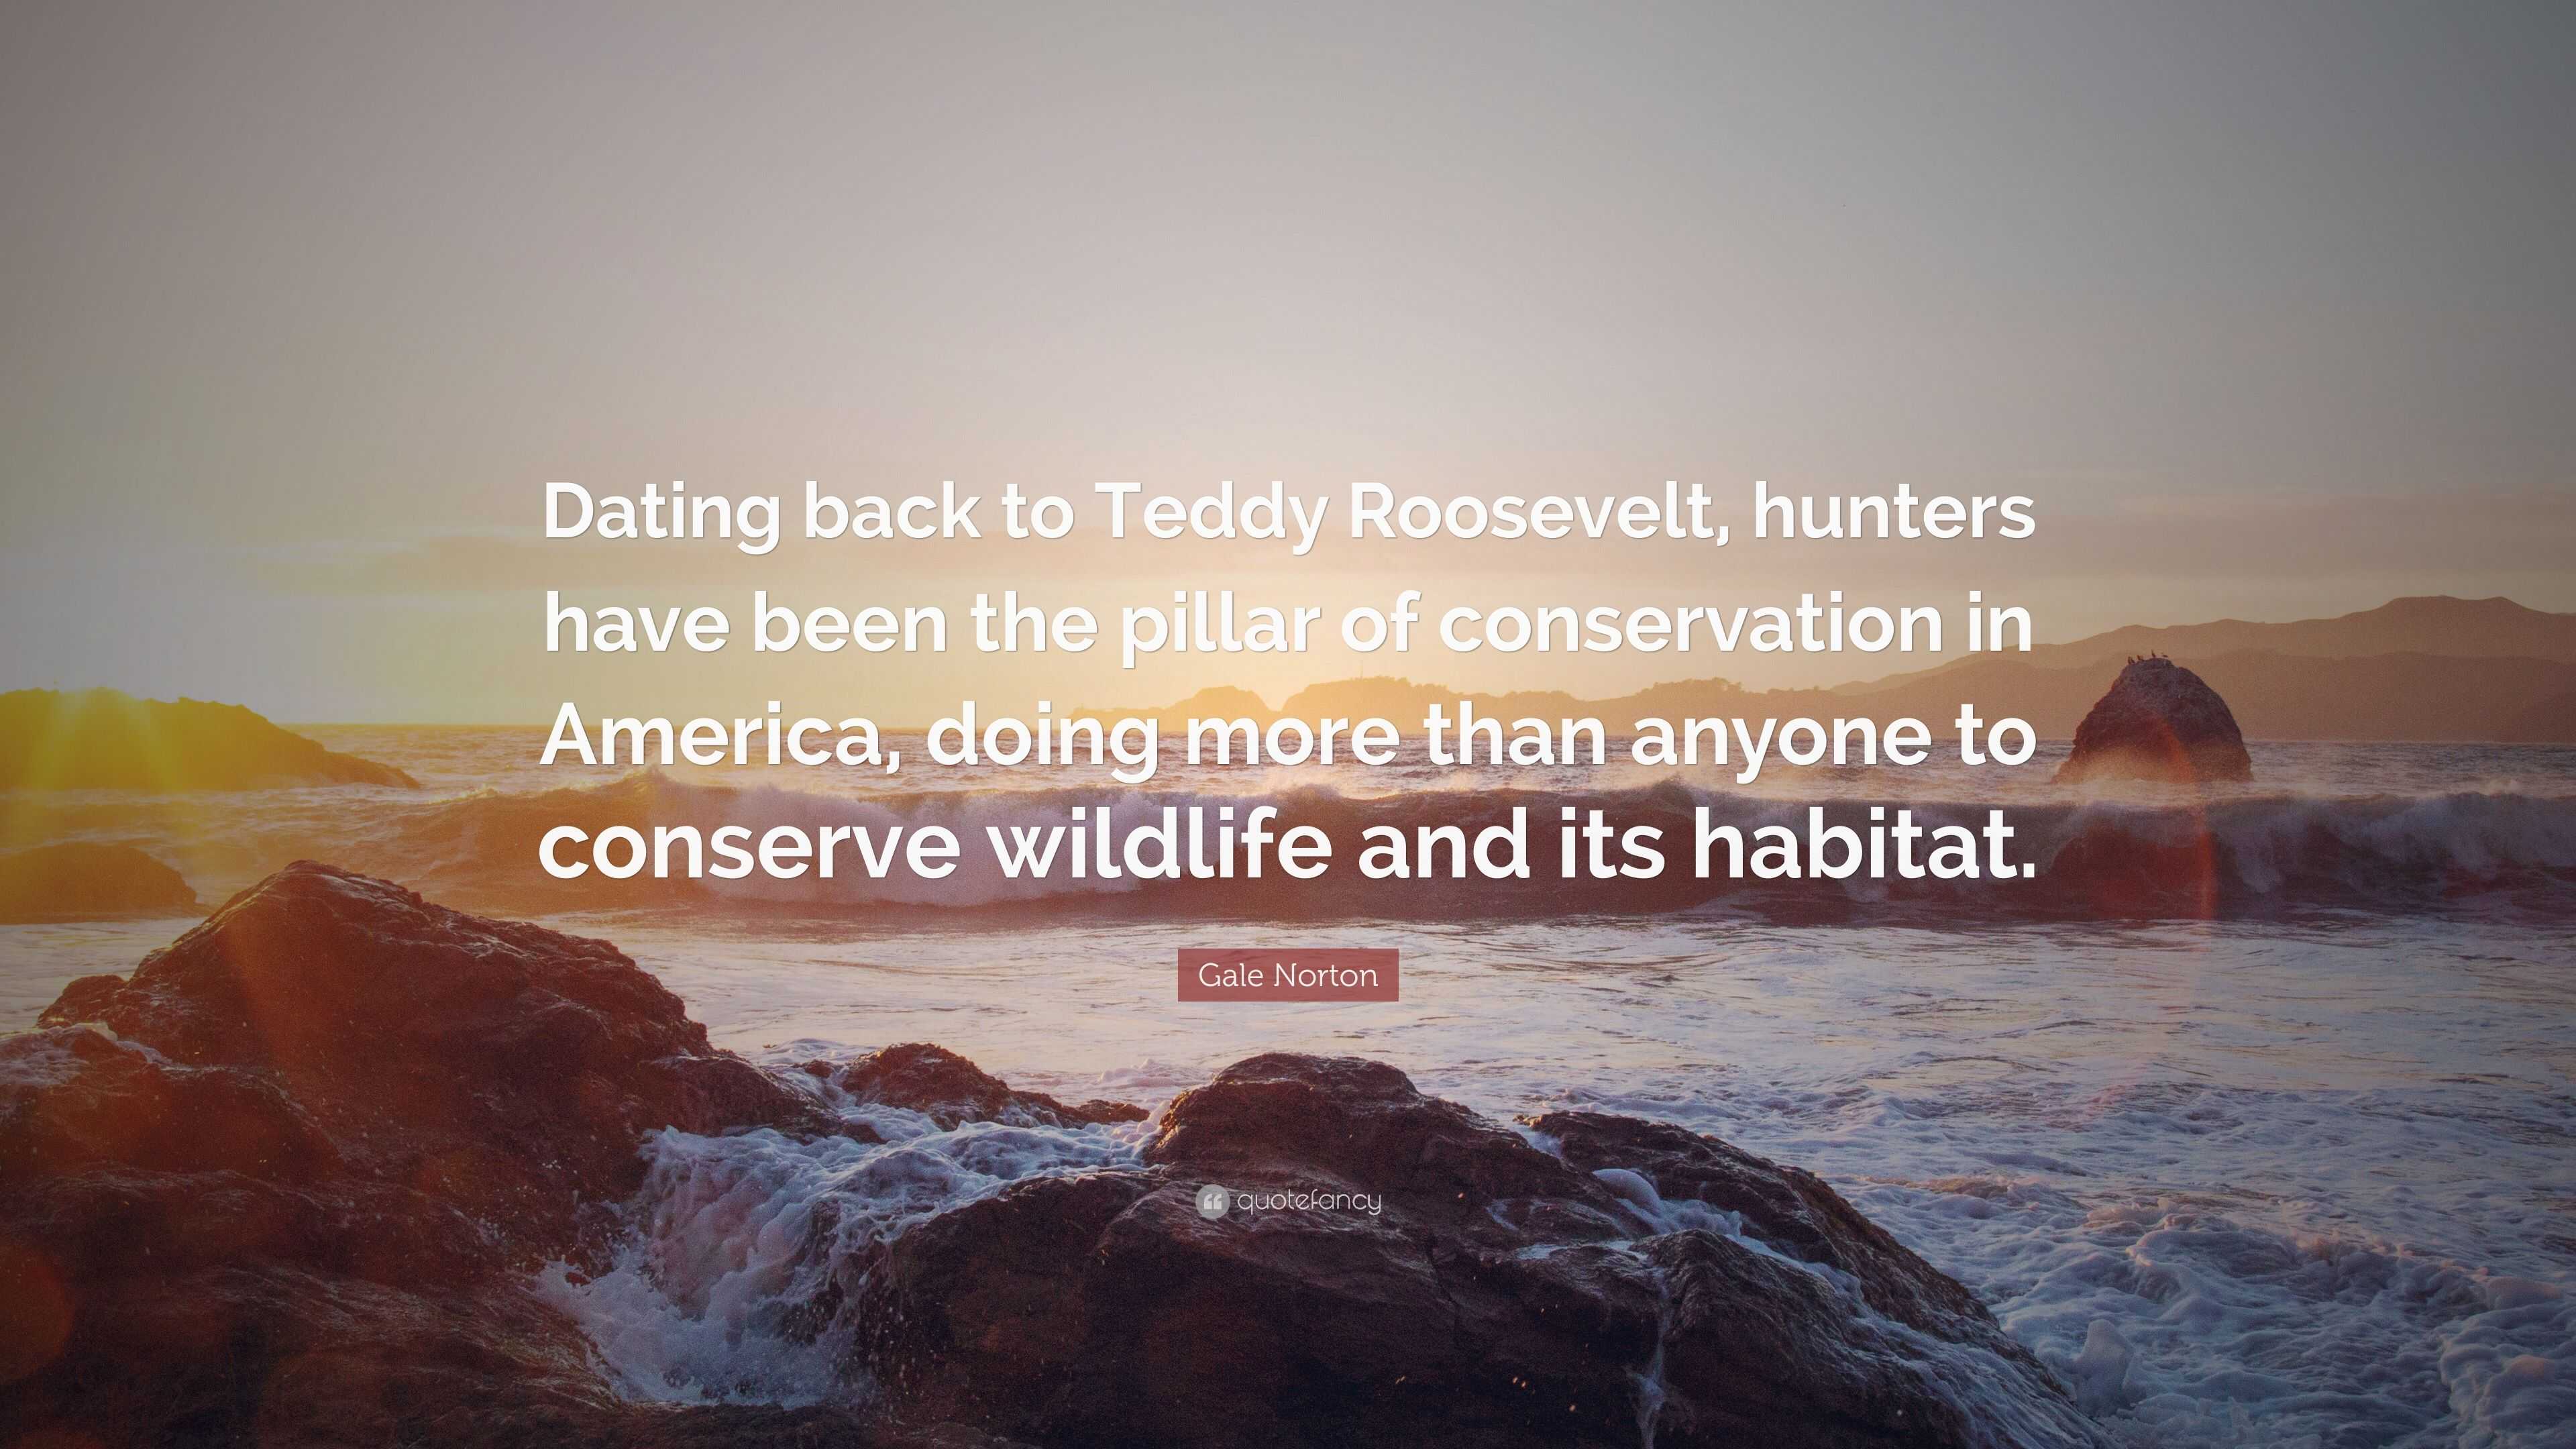 Conservation Taglines For Dating Hevenly Soword